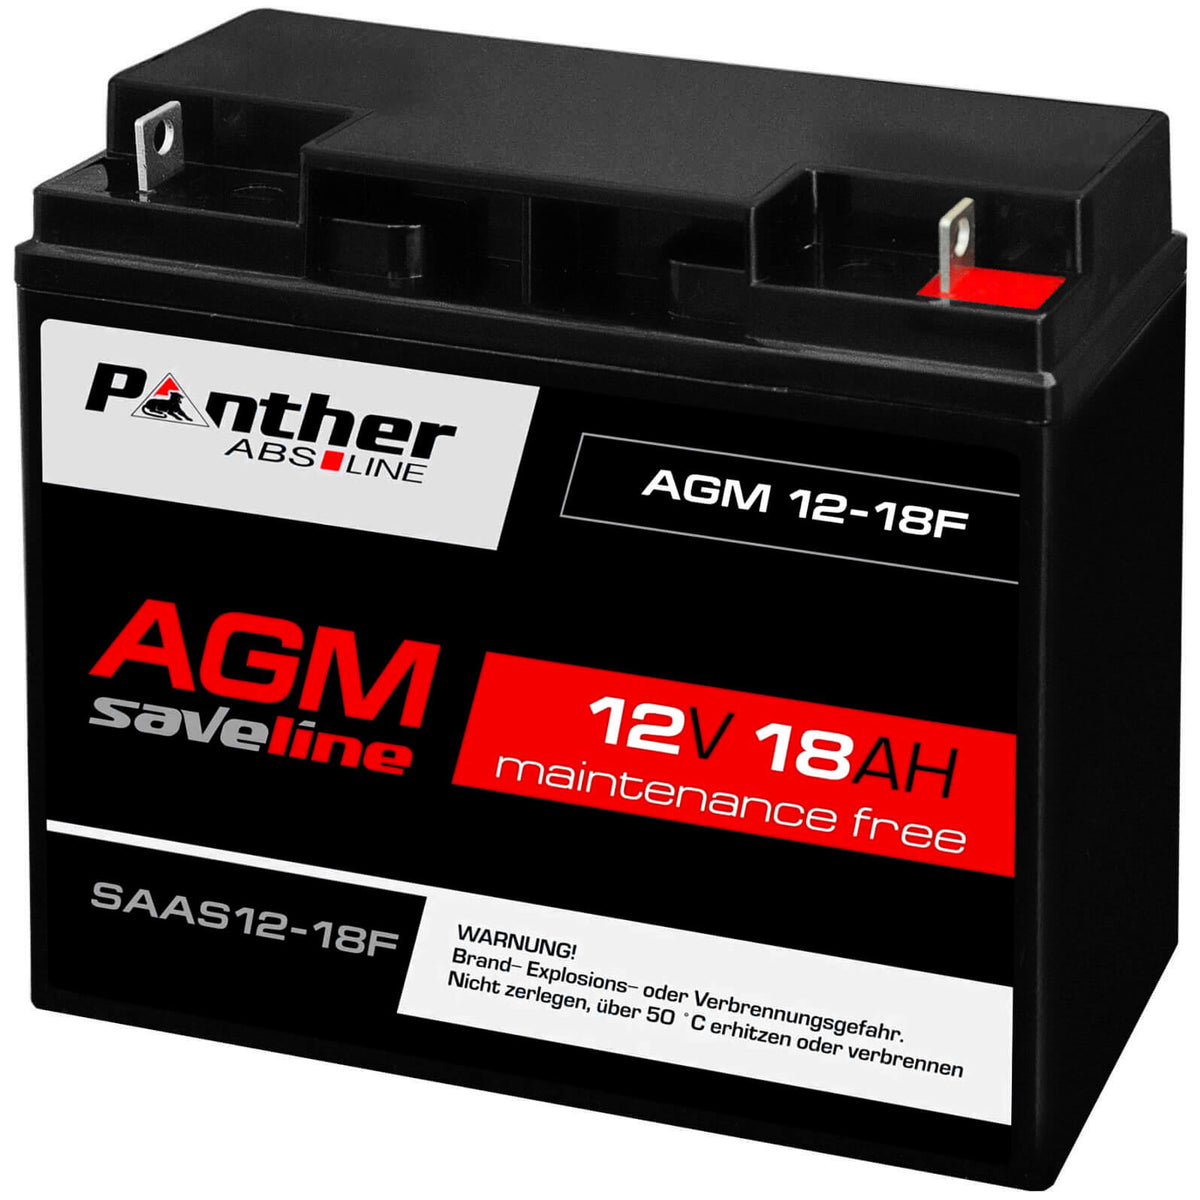 Panther saveline AGM 12V 18Ah